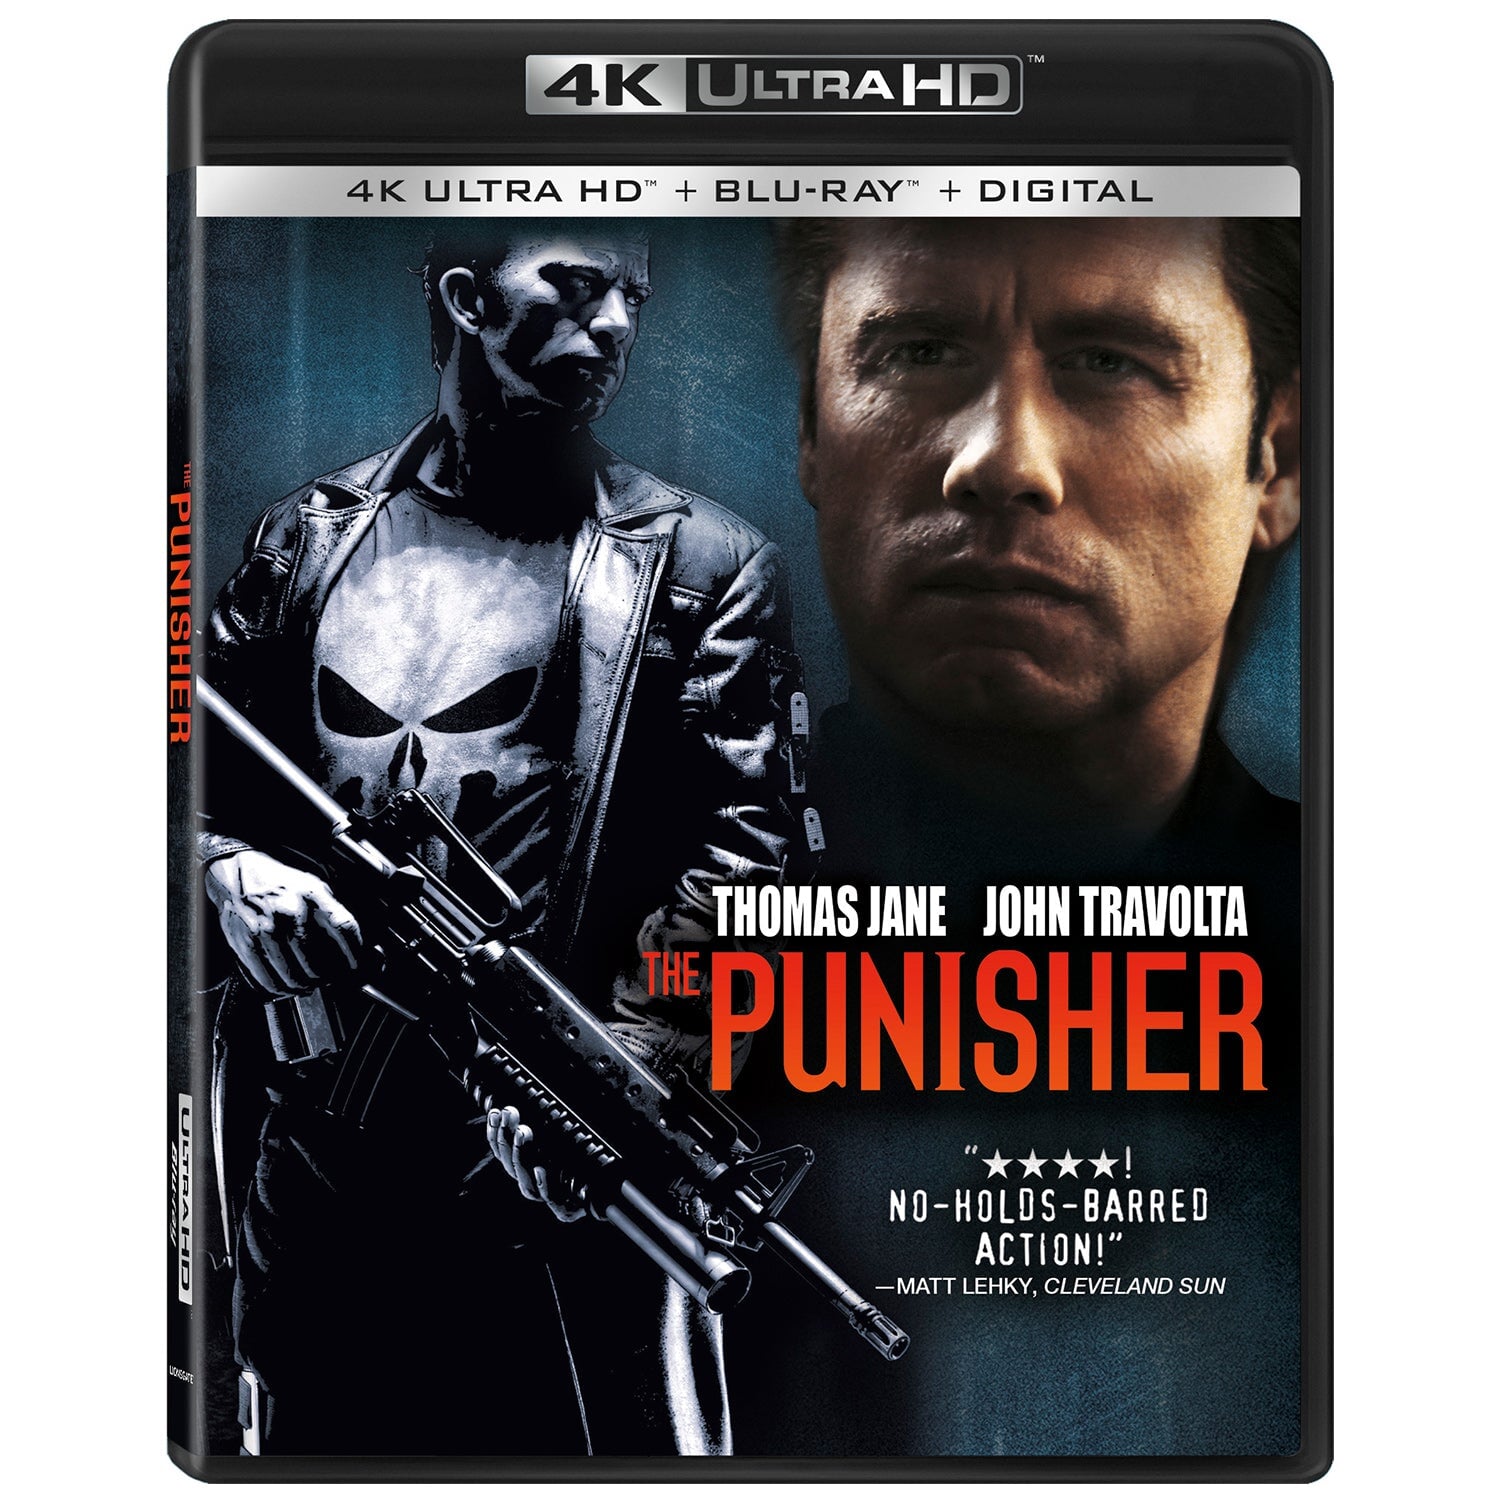 The Punisher (2004) - IMDb